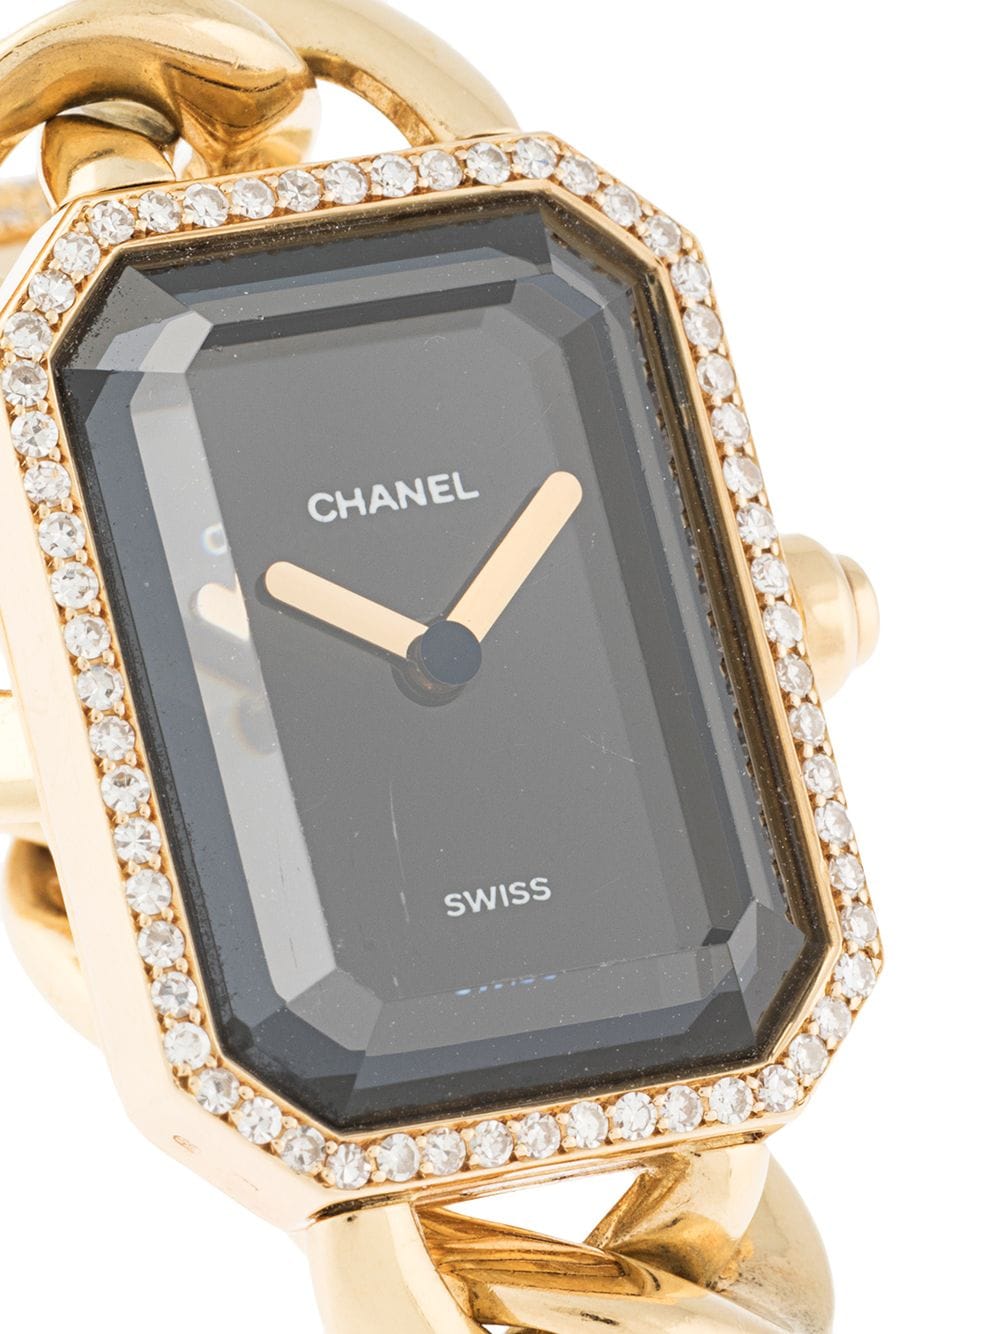 Chanel Links With Farfetch on Augmented Retail Initiative – WWD